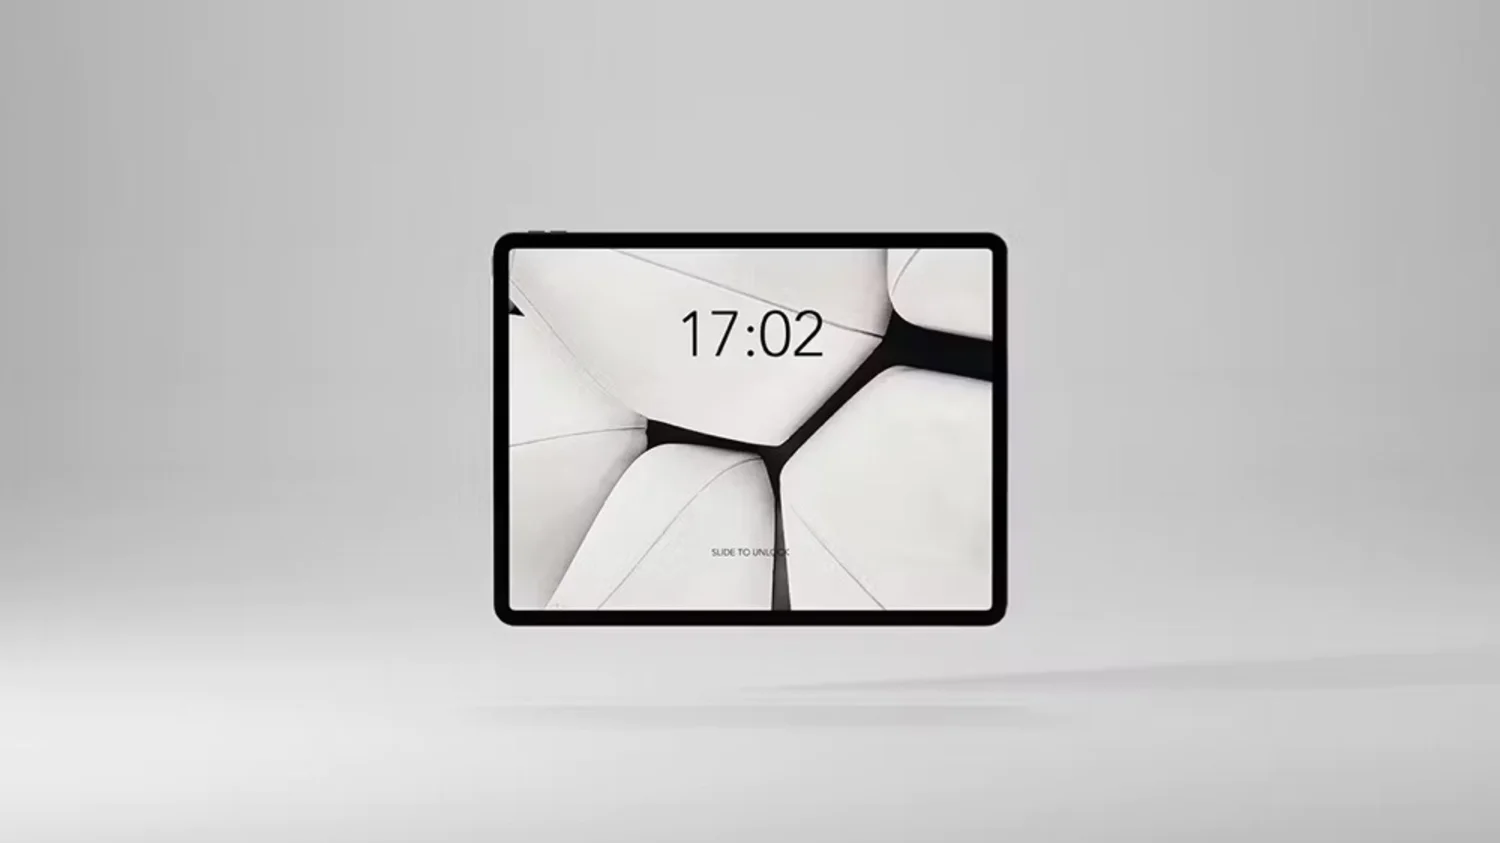 5013 6款多角度平板电脑屏幕展示UI设计样机 Landscape Tablet Screen Mockup — White Set@GOOODME.COM